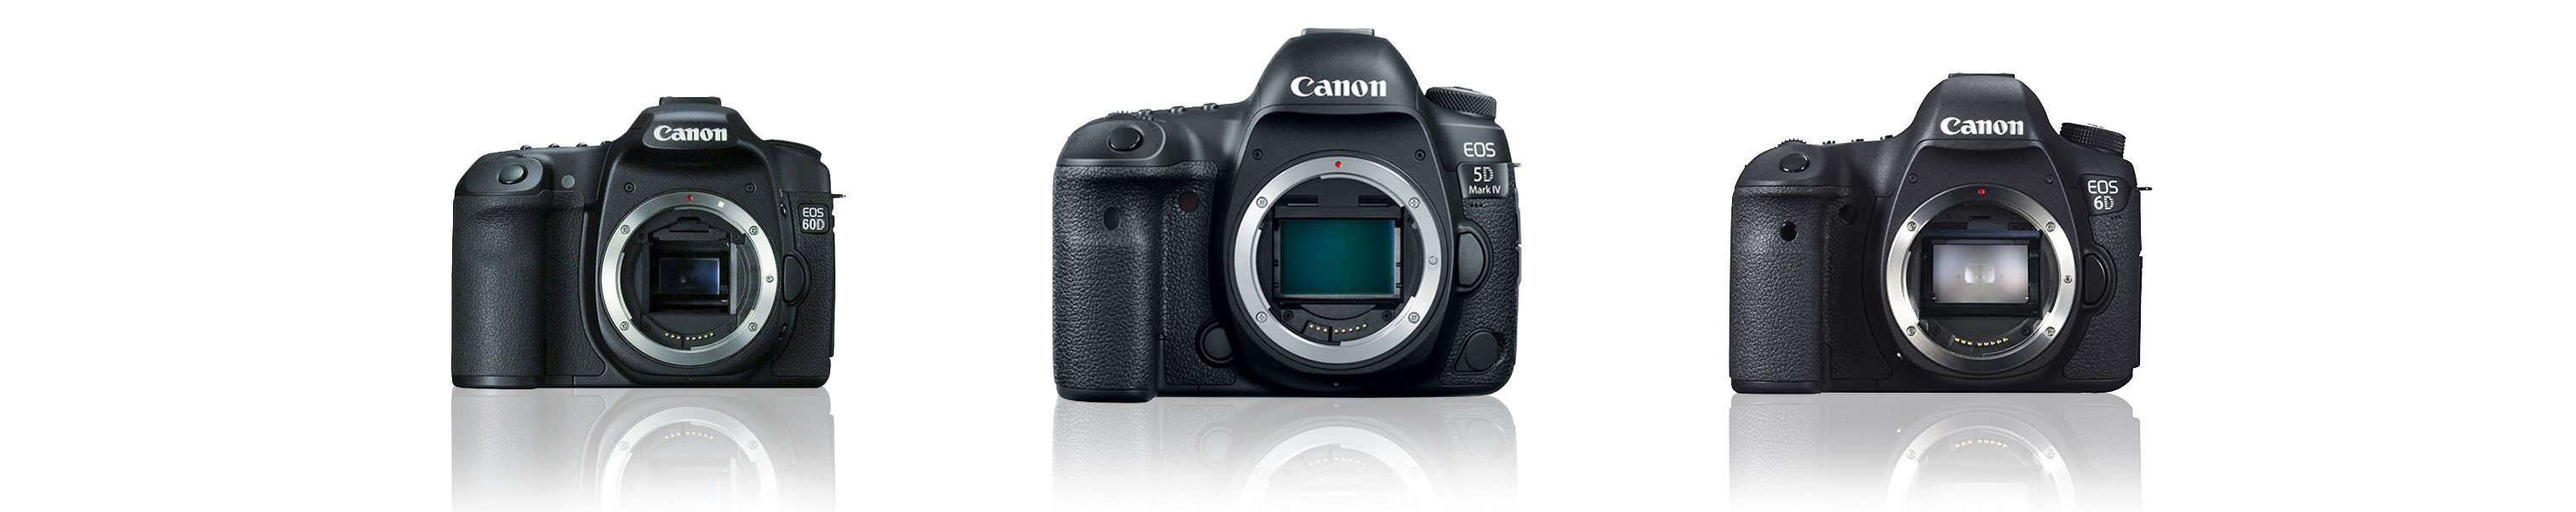 Canon LP-E6 Powered Devices